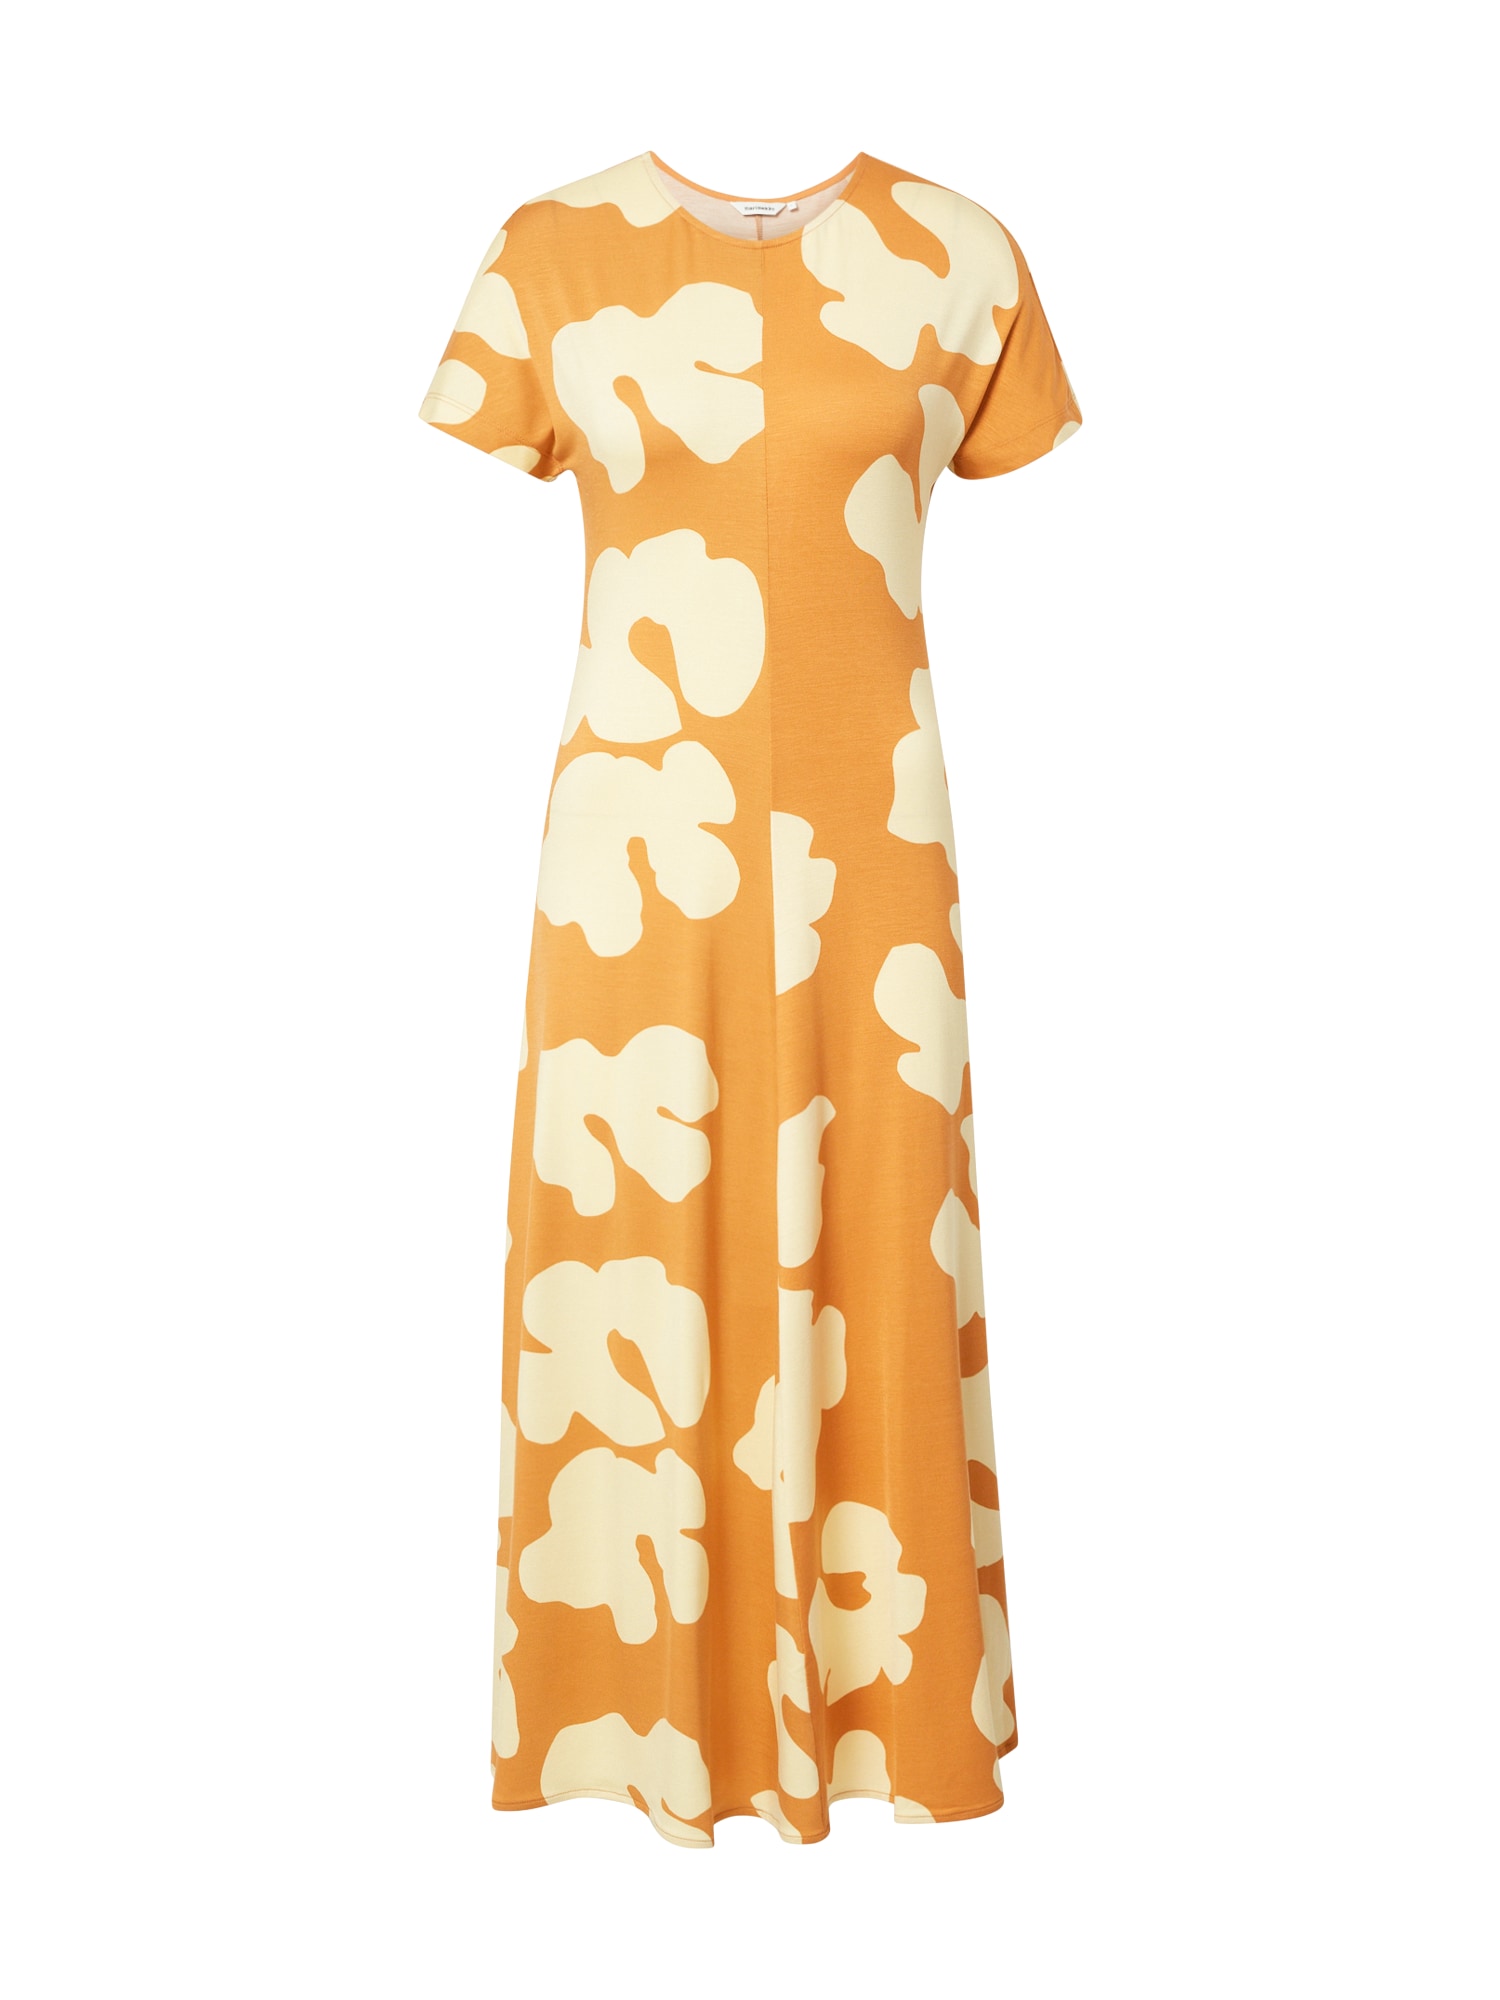 Marimekko Suknelė 'Hilding Ulpu' kremo / mandarinų spalva